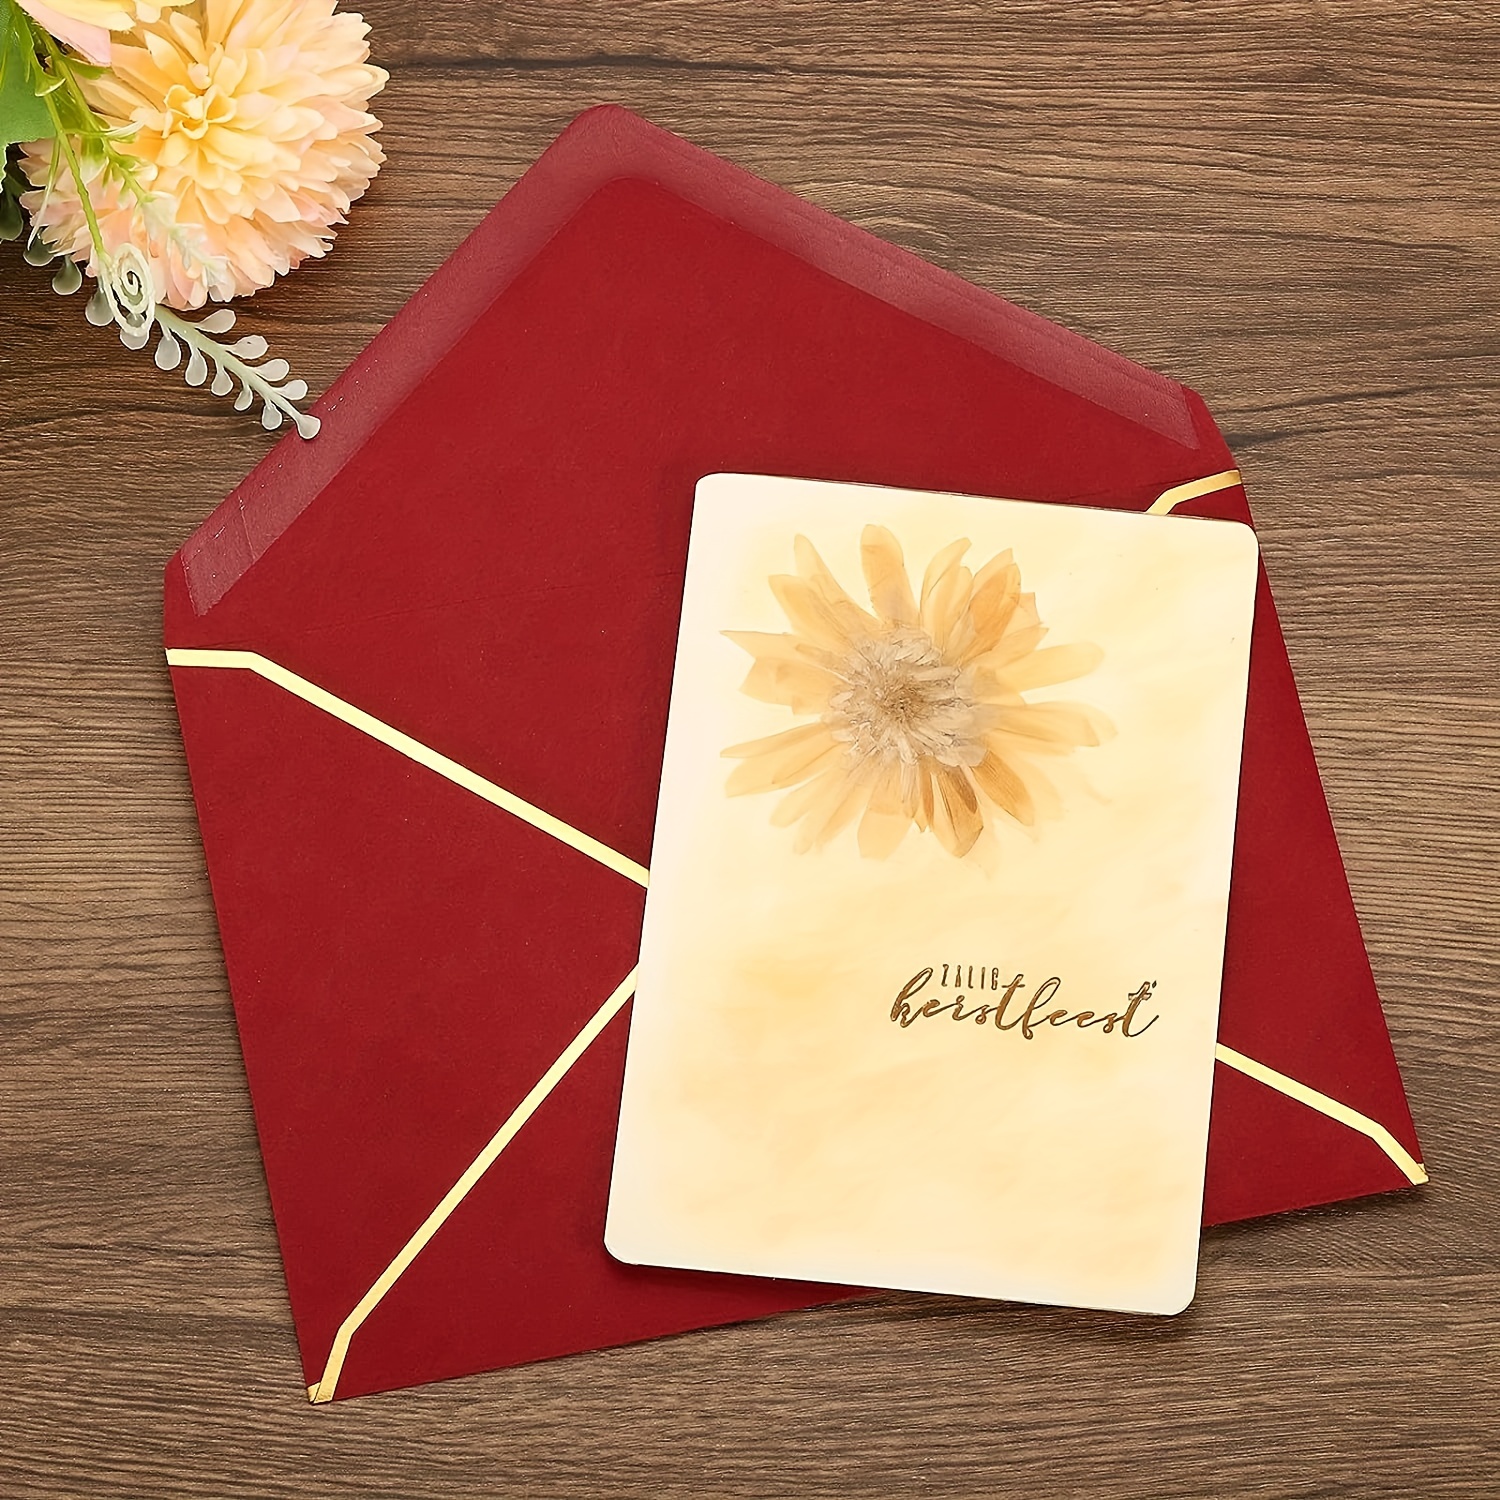 50 Pcs A7 Invitation Envelopes, 5x7 Envelopes for Invitations White Envelopes for 5x7 Cards Luxury Envelopes Mailing Envelopes for Wedding